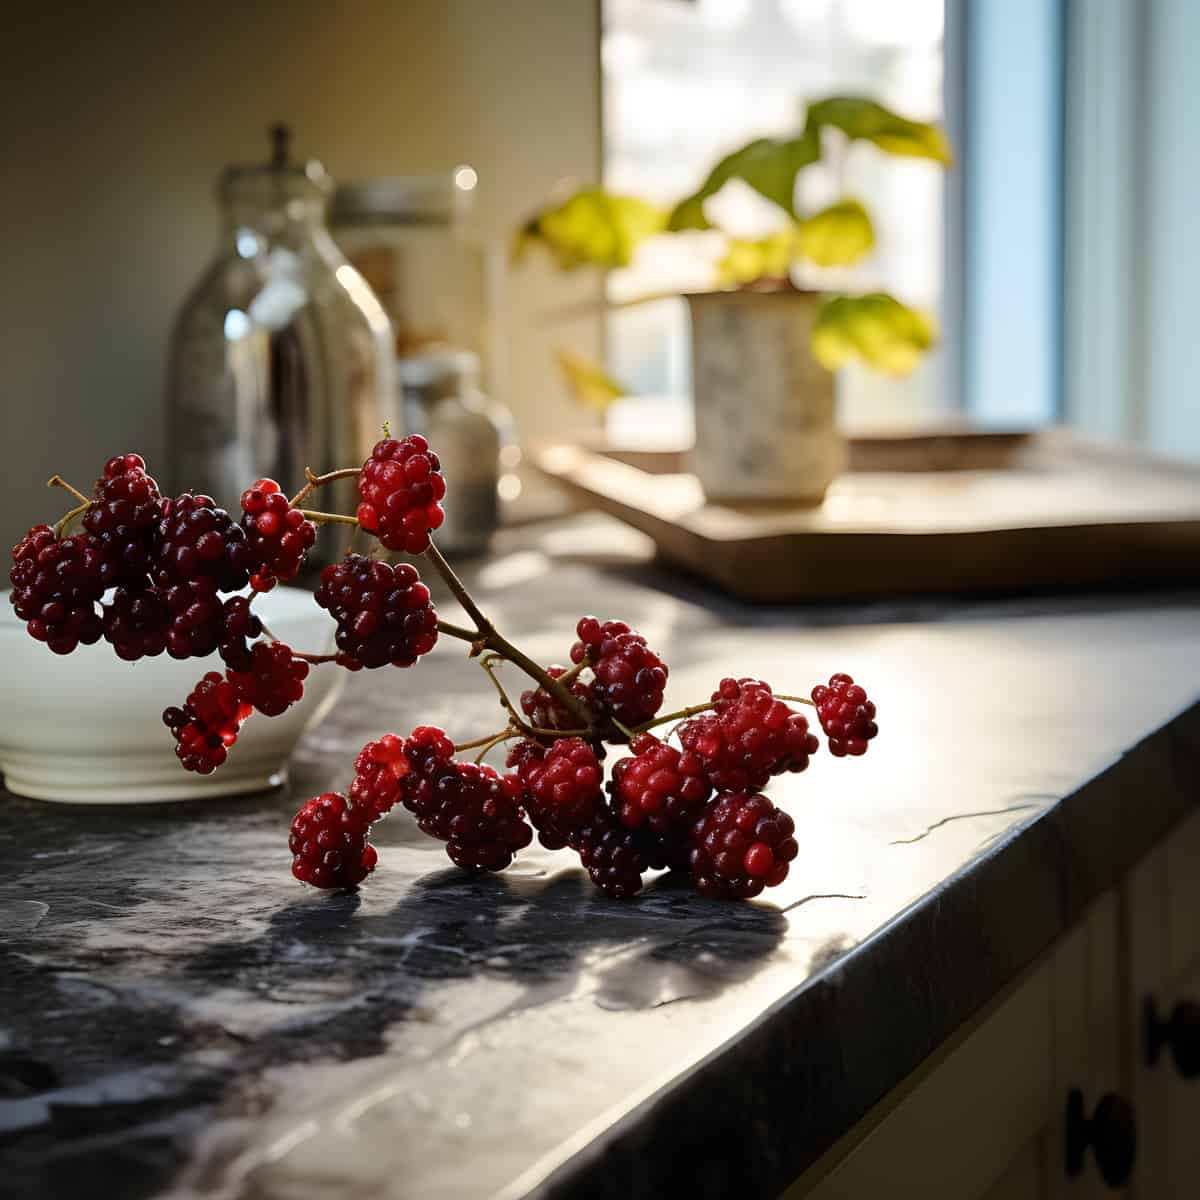 Stone Bramble Berry on a kitchen counter